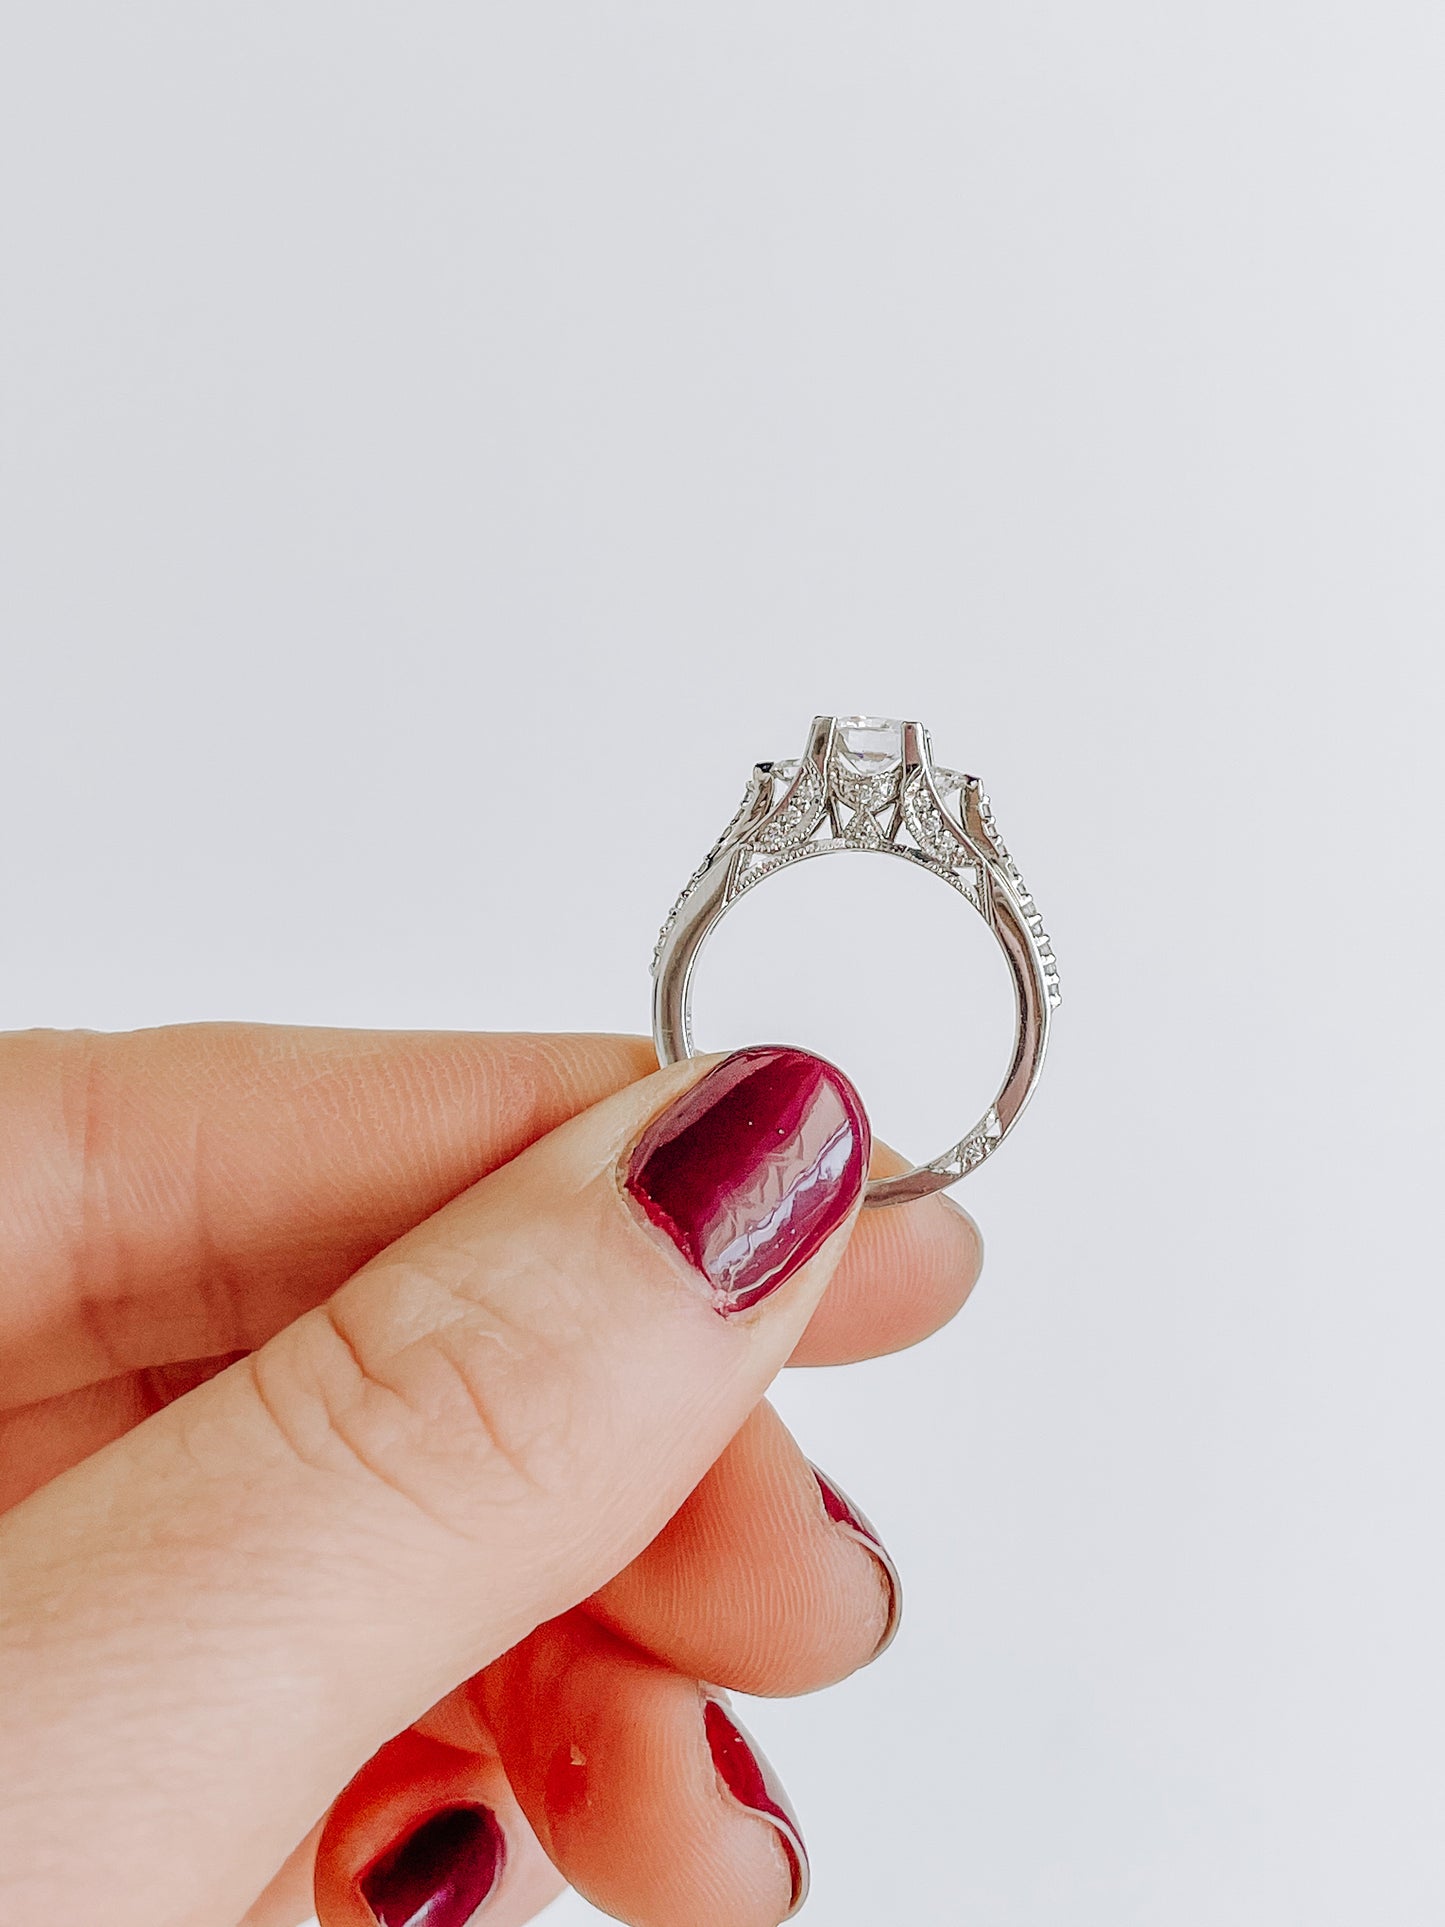 Tacori Platinum Three Stone Engagement Ring